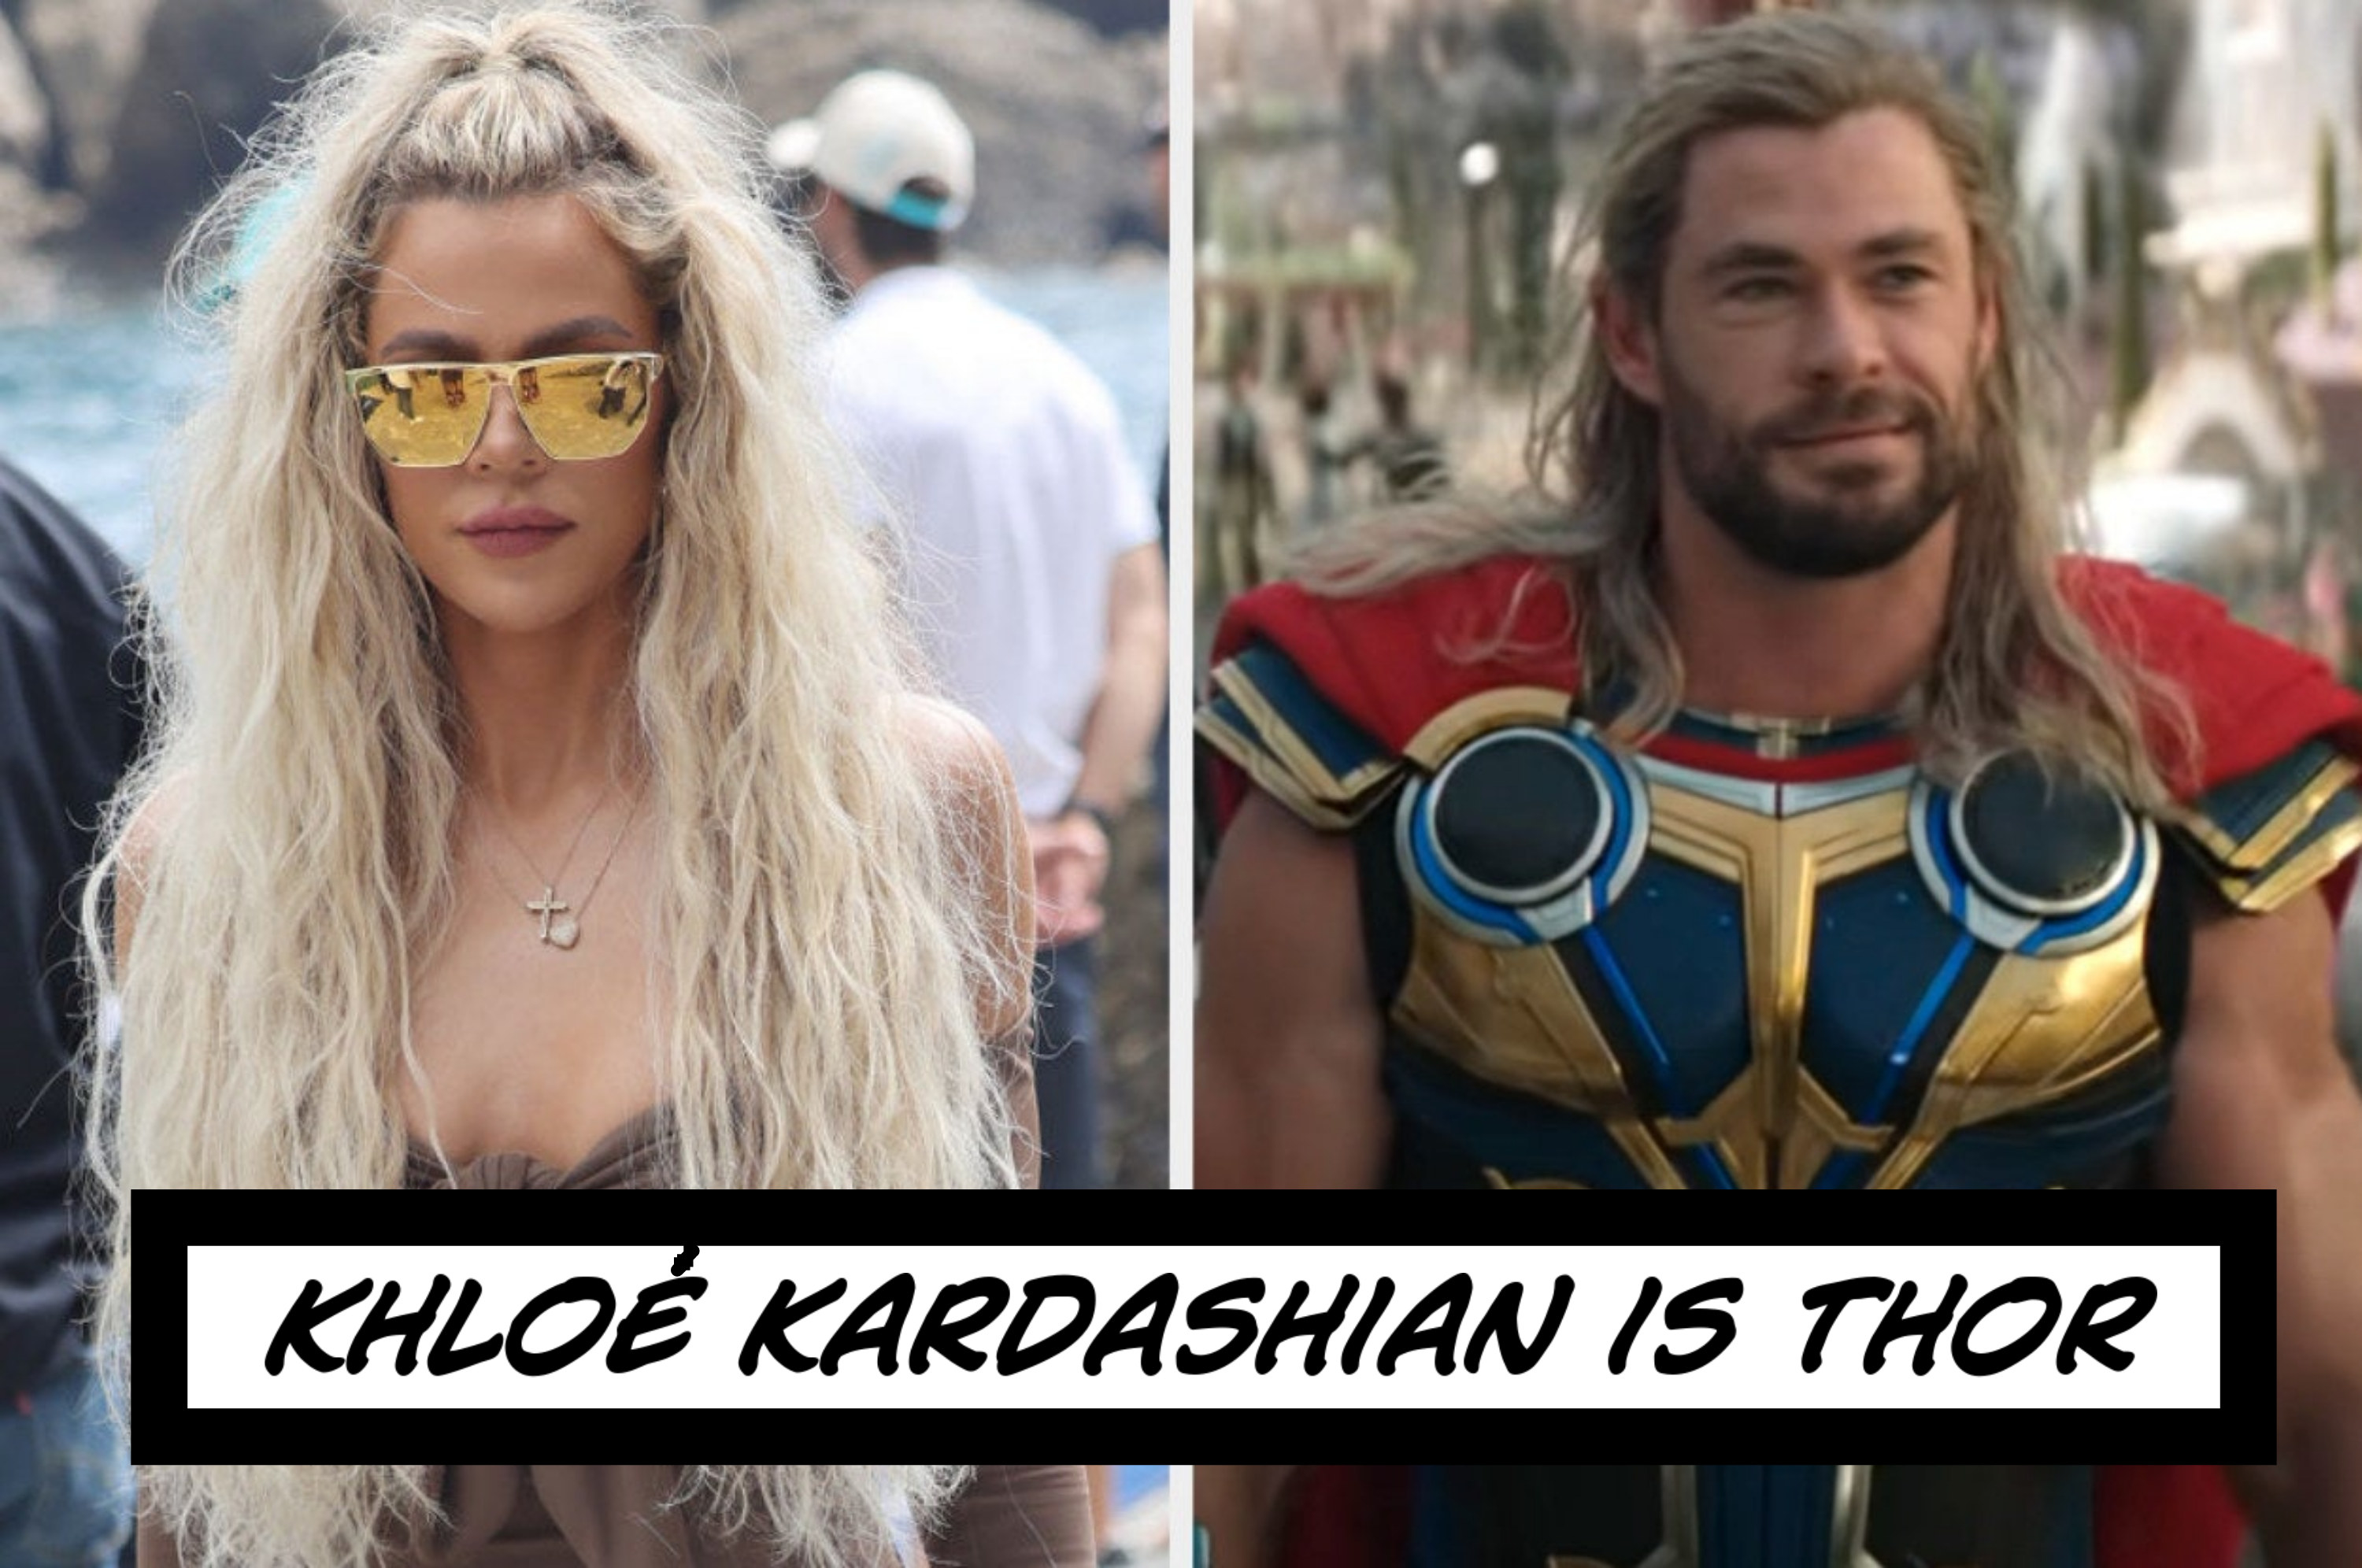 Khloé Kardashian as Thor